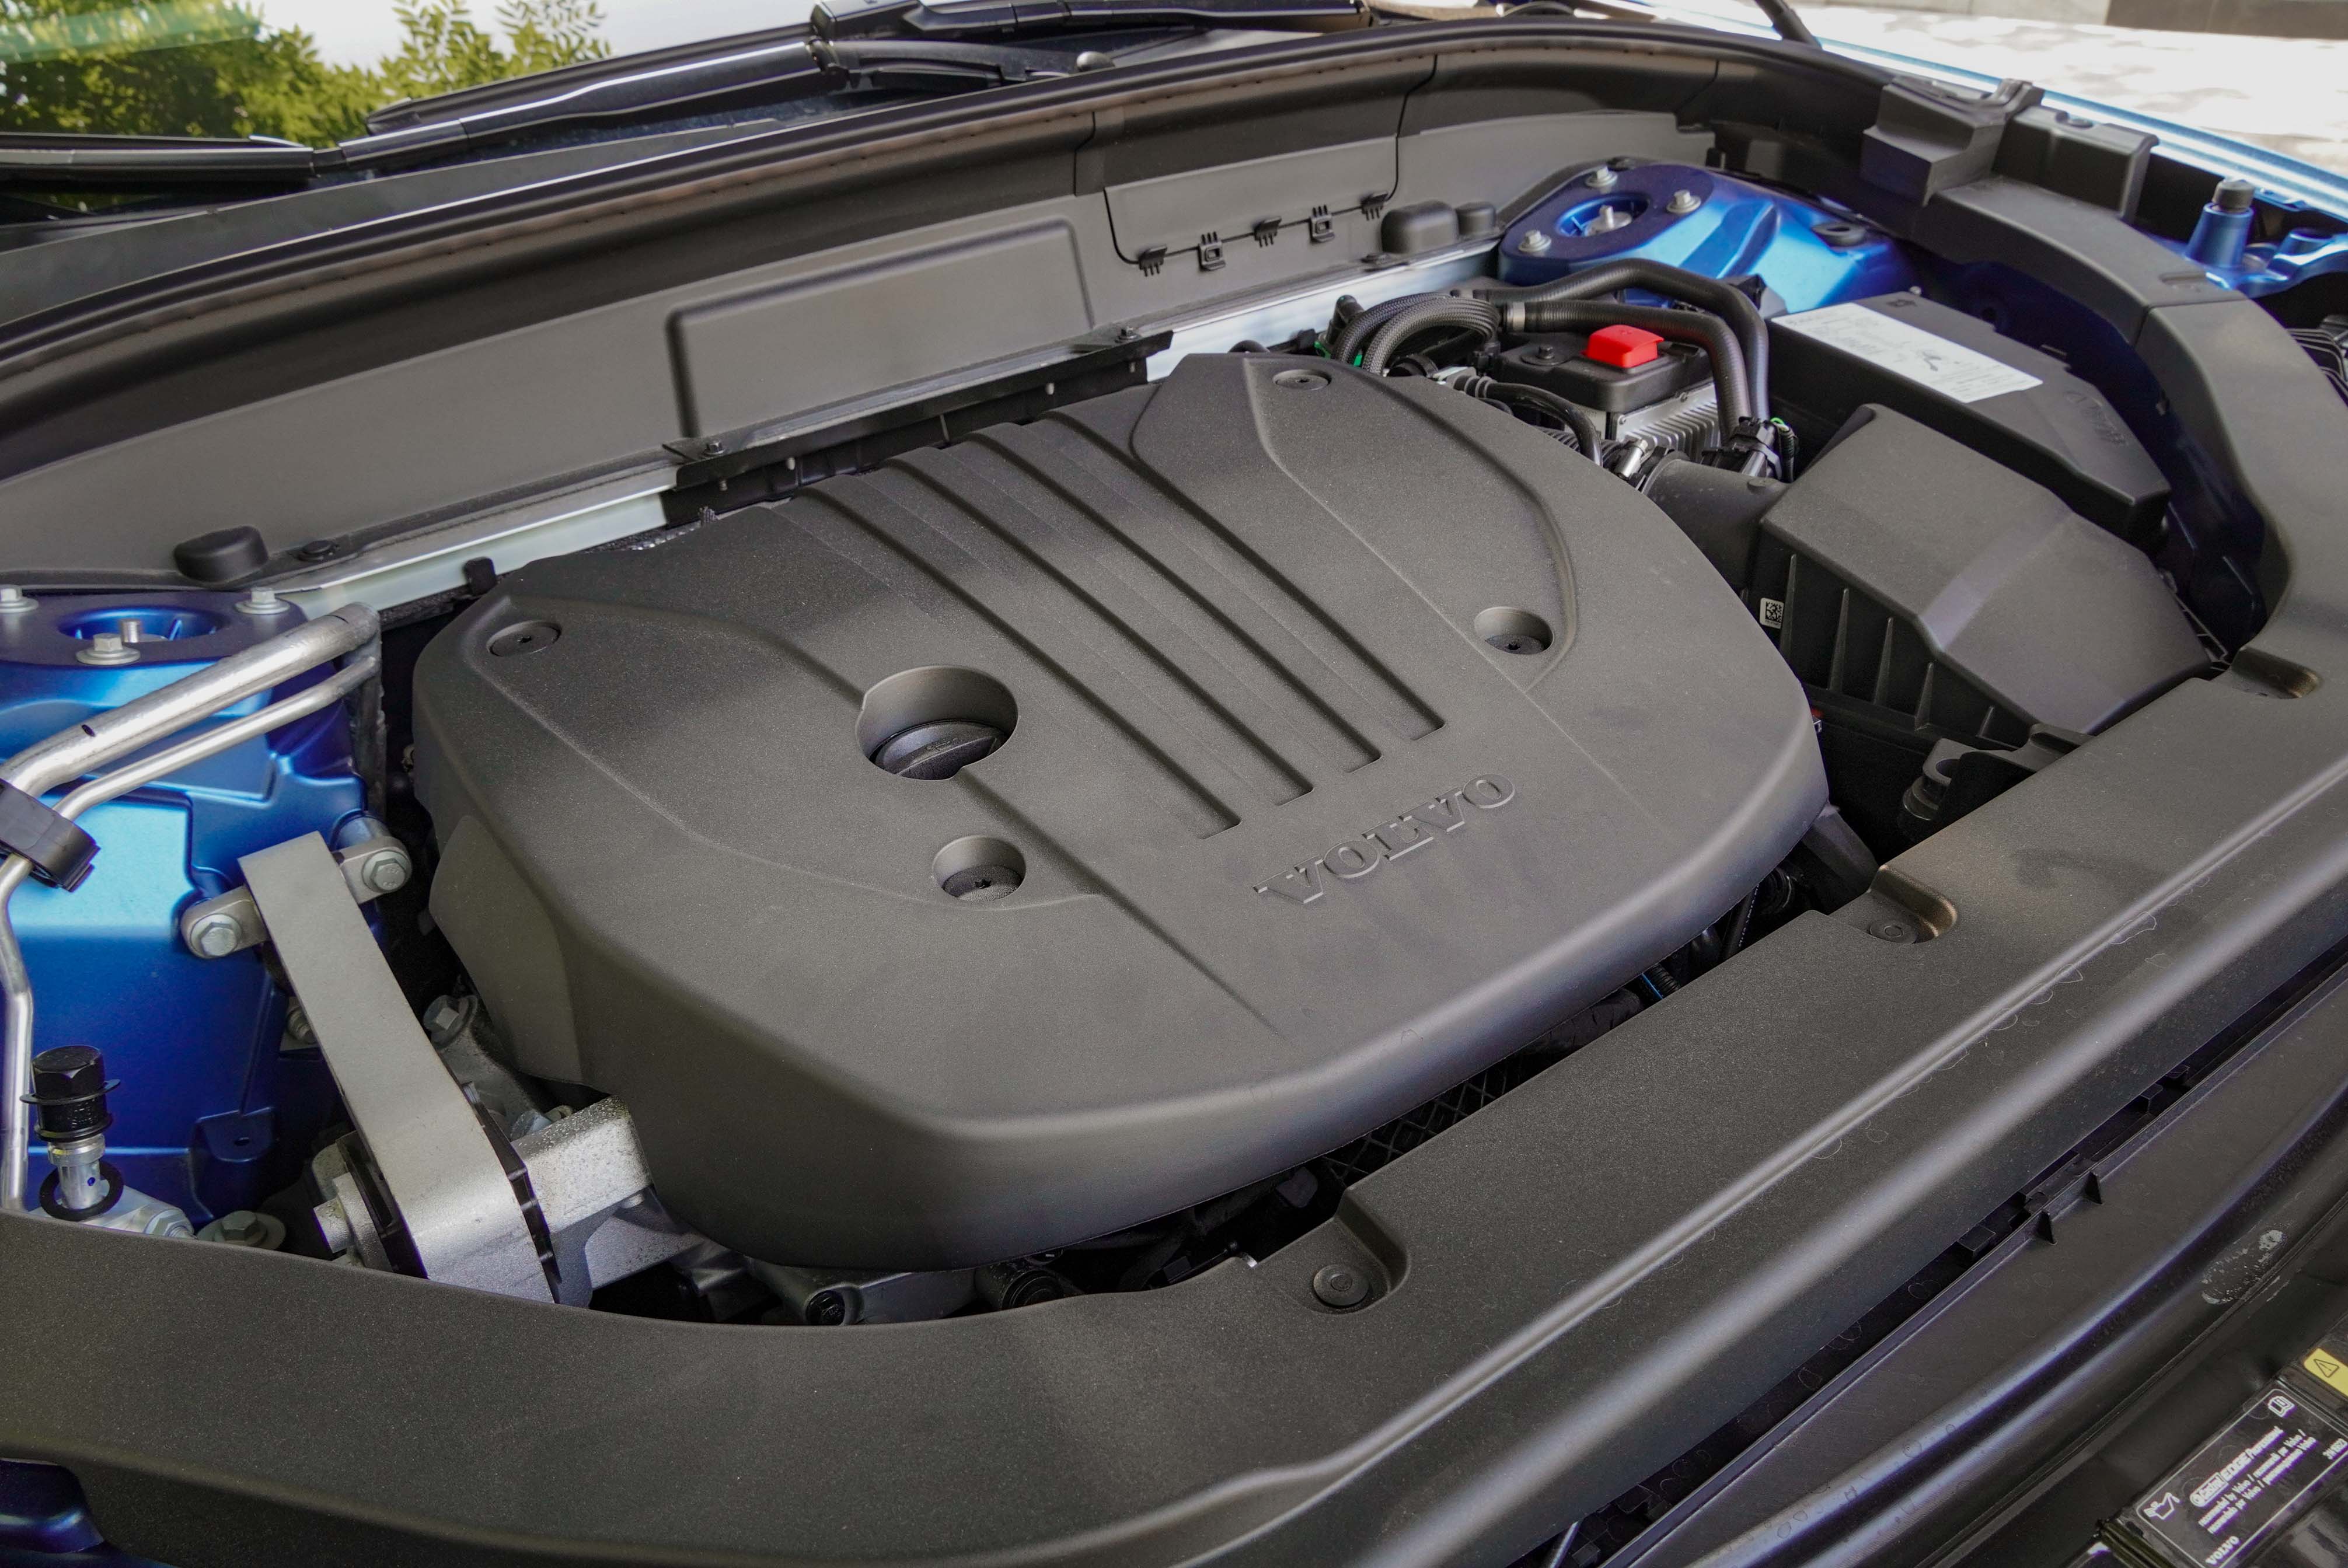 XC60 B5 採用第三代 Drive-E 動力系統，四缸渦輪引擎輸出為 250 hp/35.7 kgm，瞬間加速或靜止起步時，48V 輕油電系統可提供 14 hp 額外動力。 